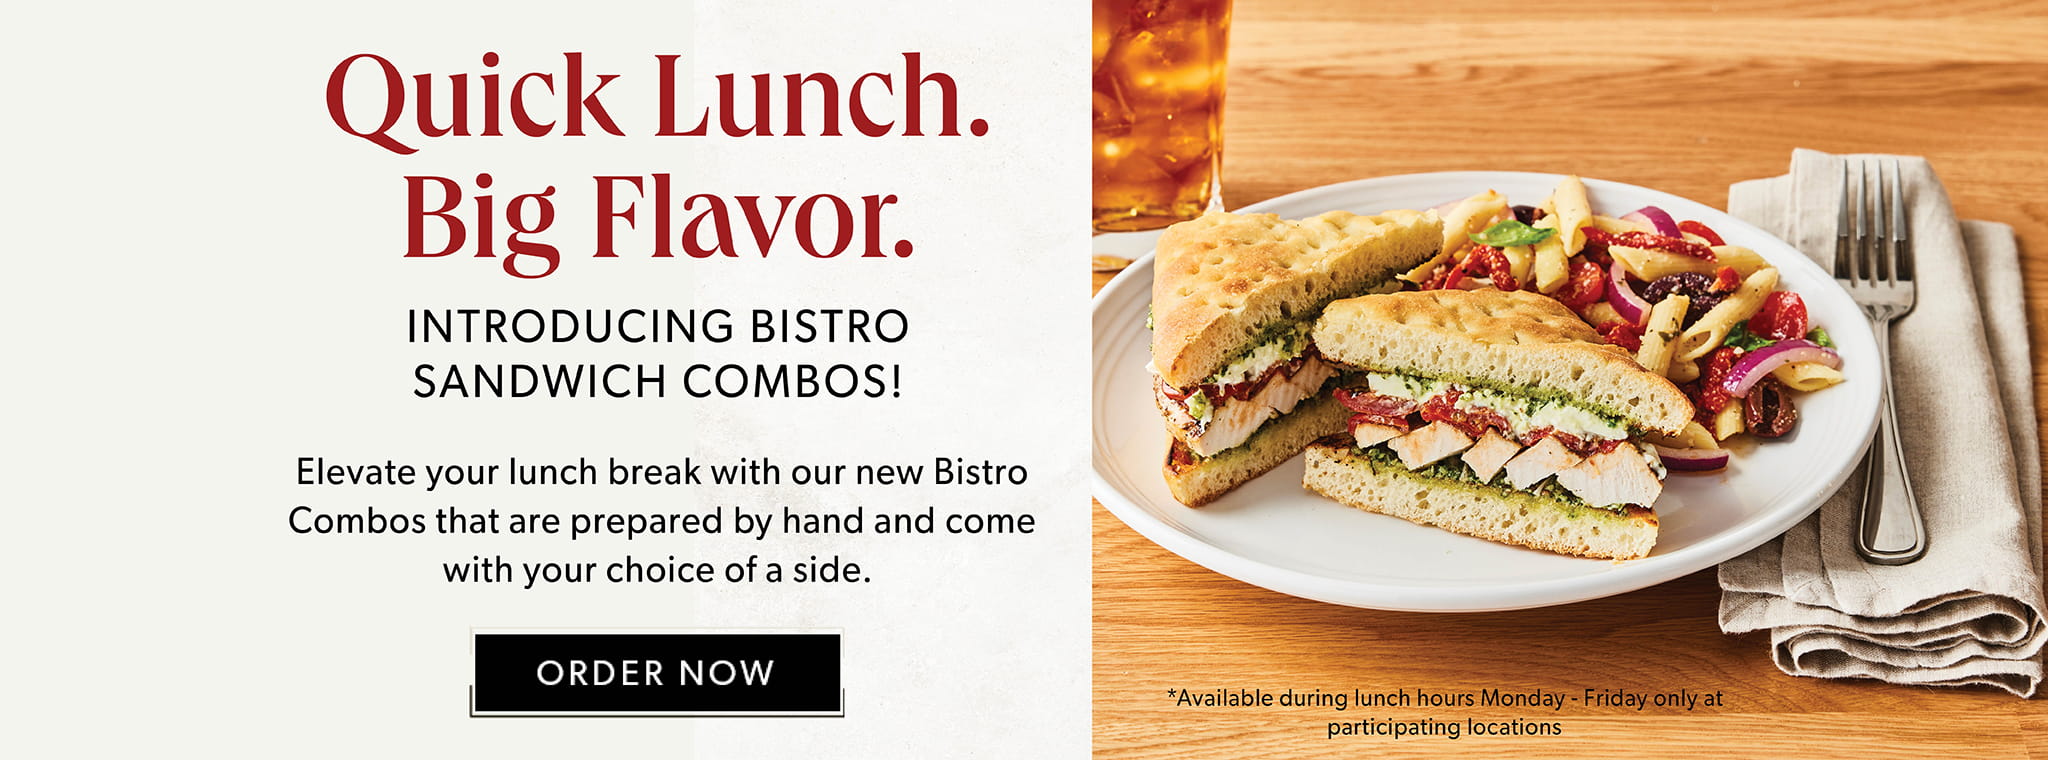 Quick Lunch. Big Flavor. Introducing Bistro Sandwich Combos